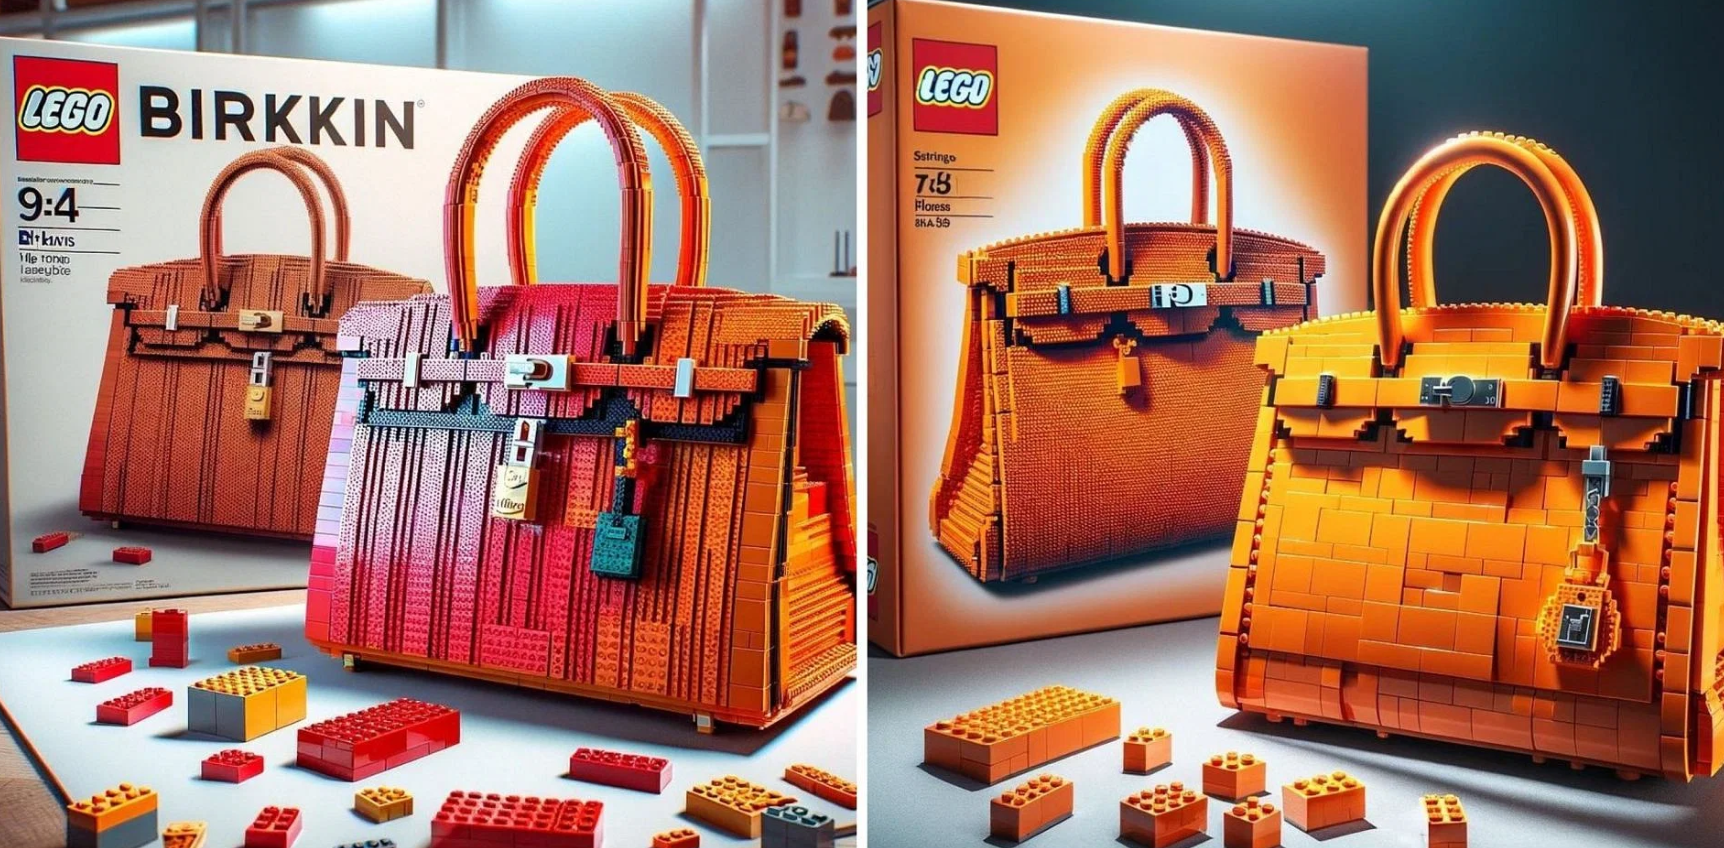 Hermès Birkin Lego ของจริงหรือข่าวปลอม